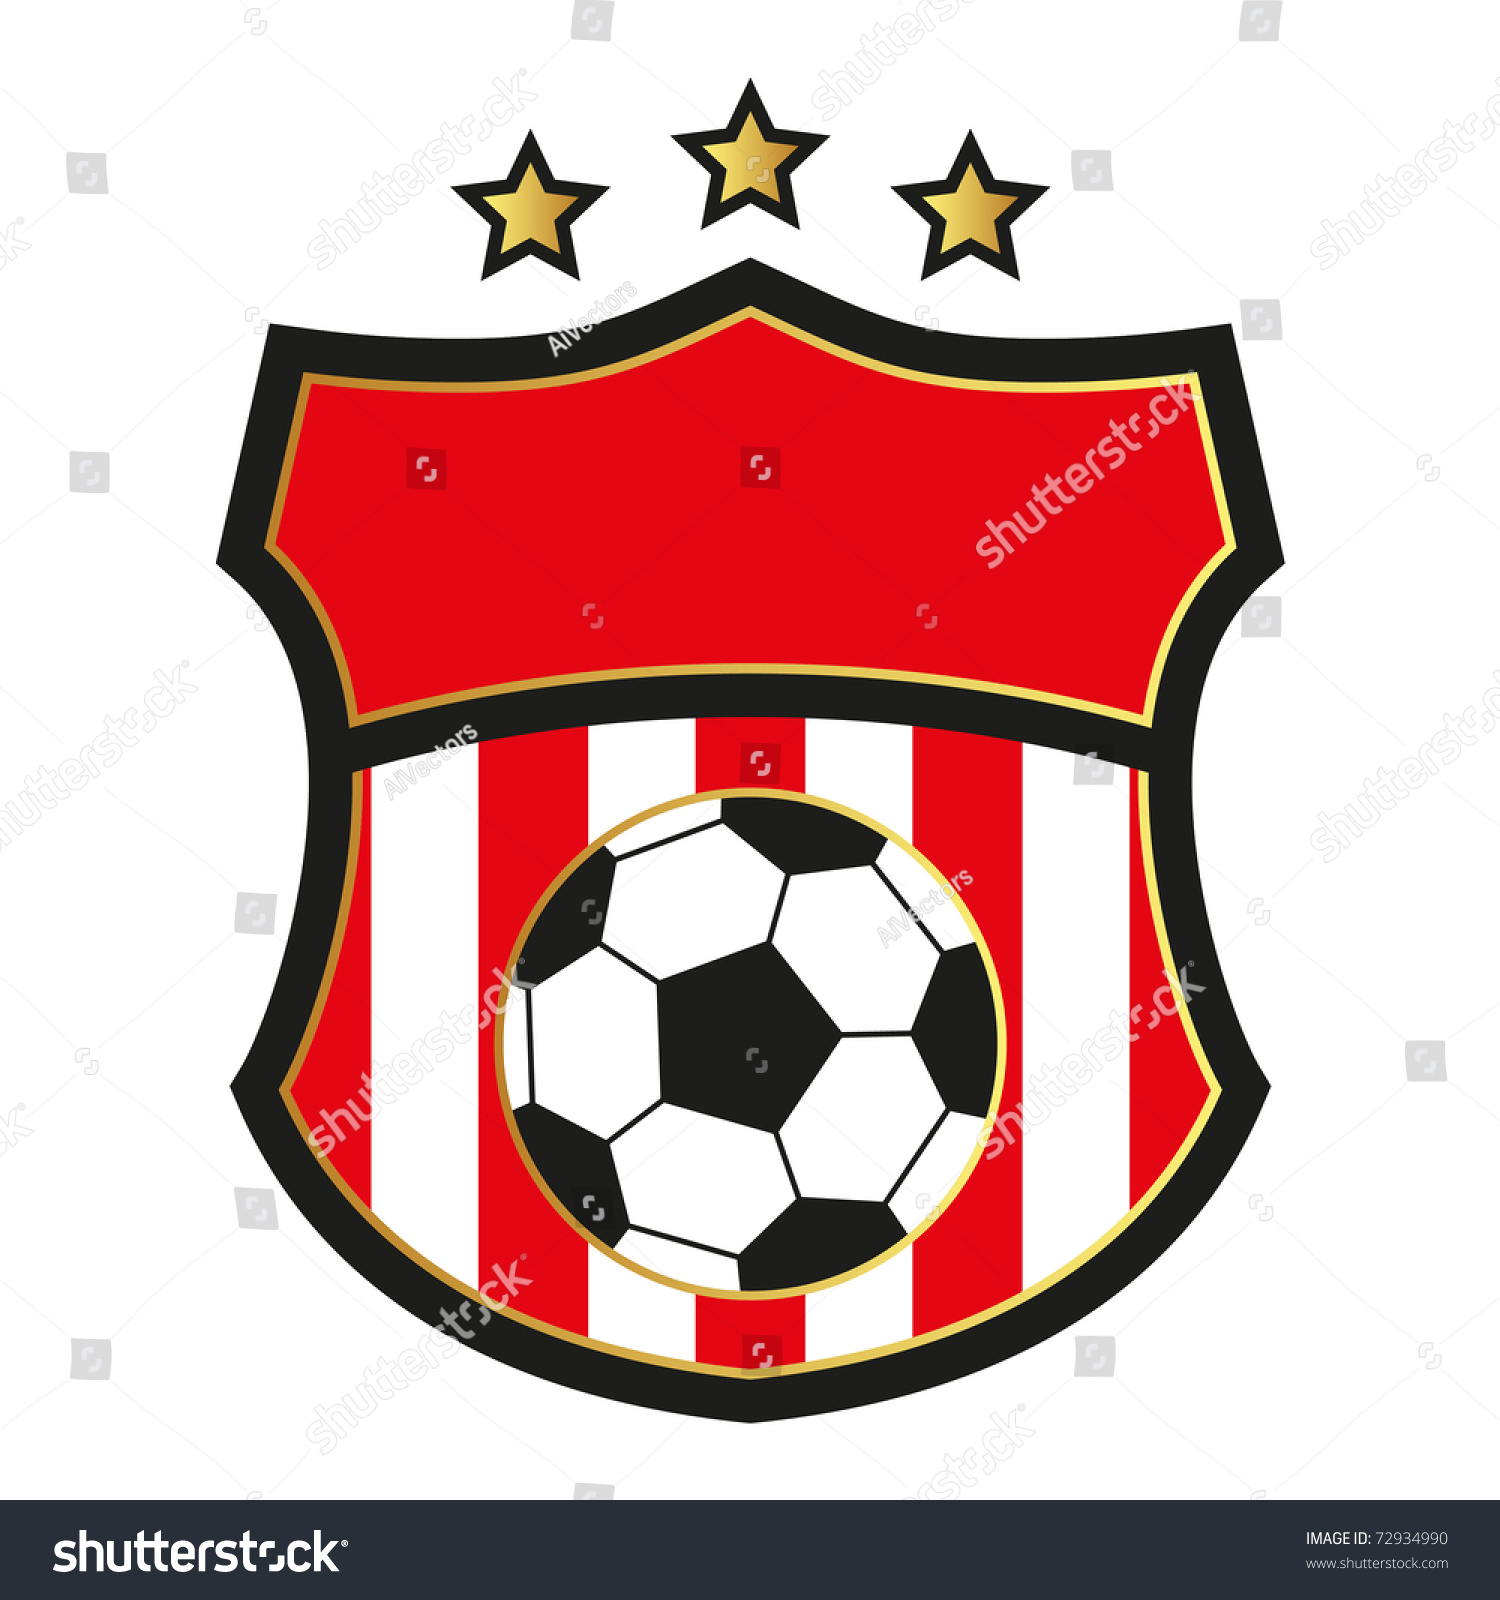 Football Logo Stock Vector 72934990 - Shutterstock